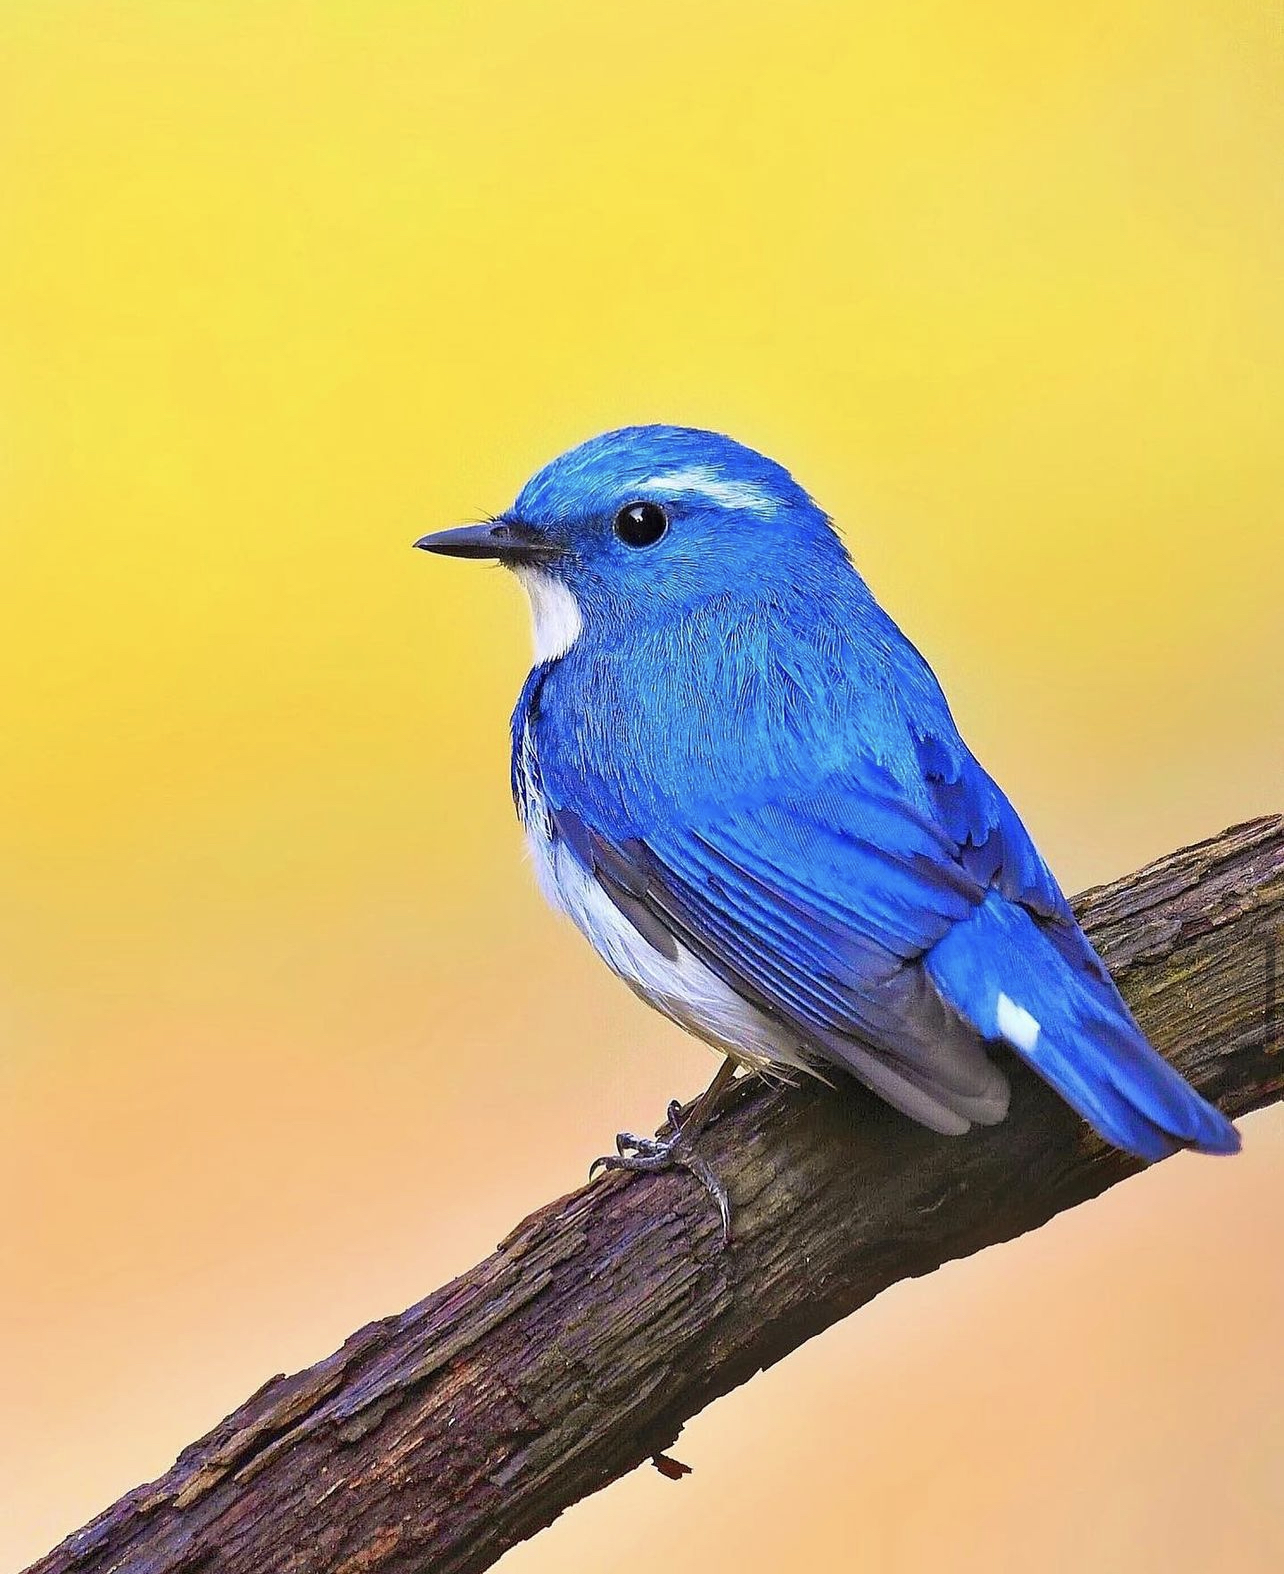 A bright blue bird perches on a branch.